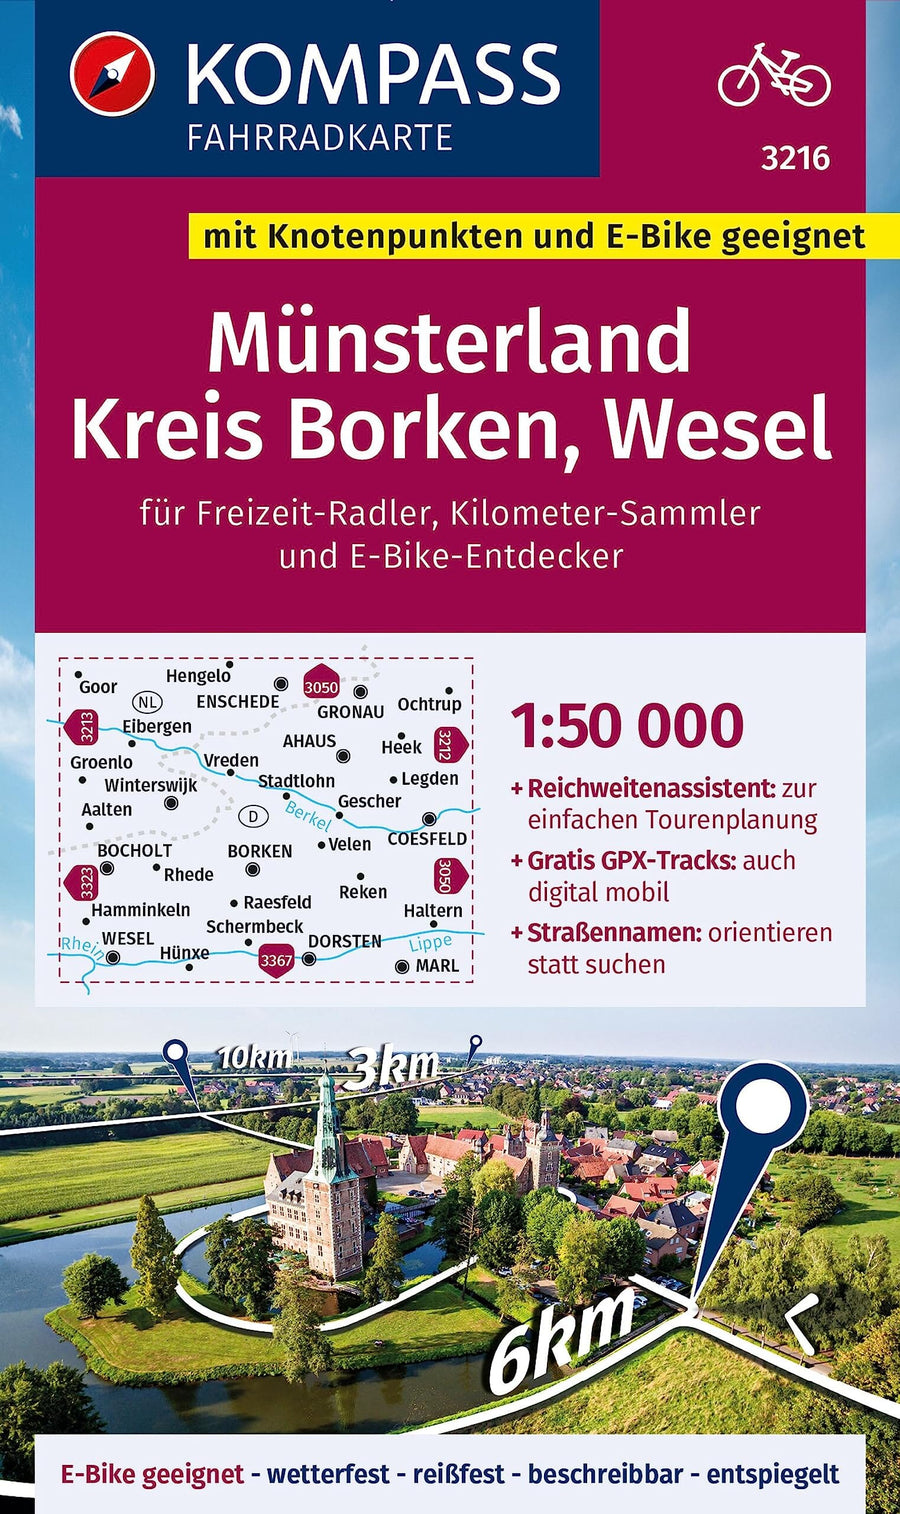 Carte cycliste n° F3216 - Münsterland, Kreis Borken, Wese (Allemagne) | Kompass carte pliée Kompass 